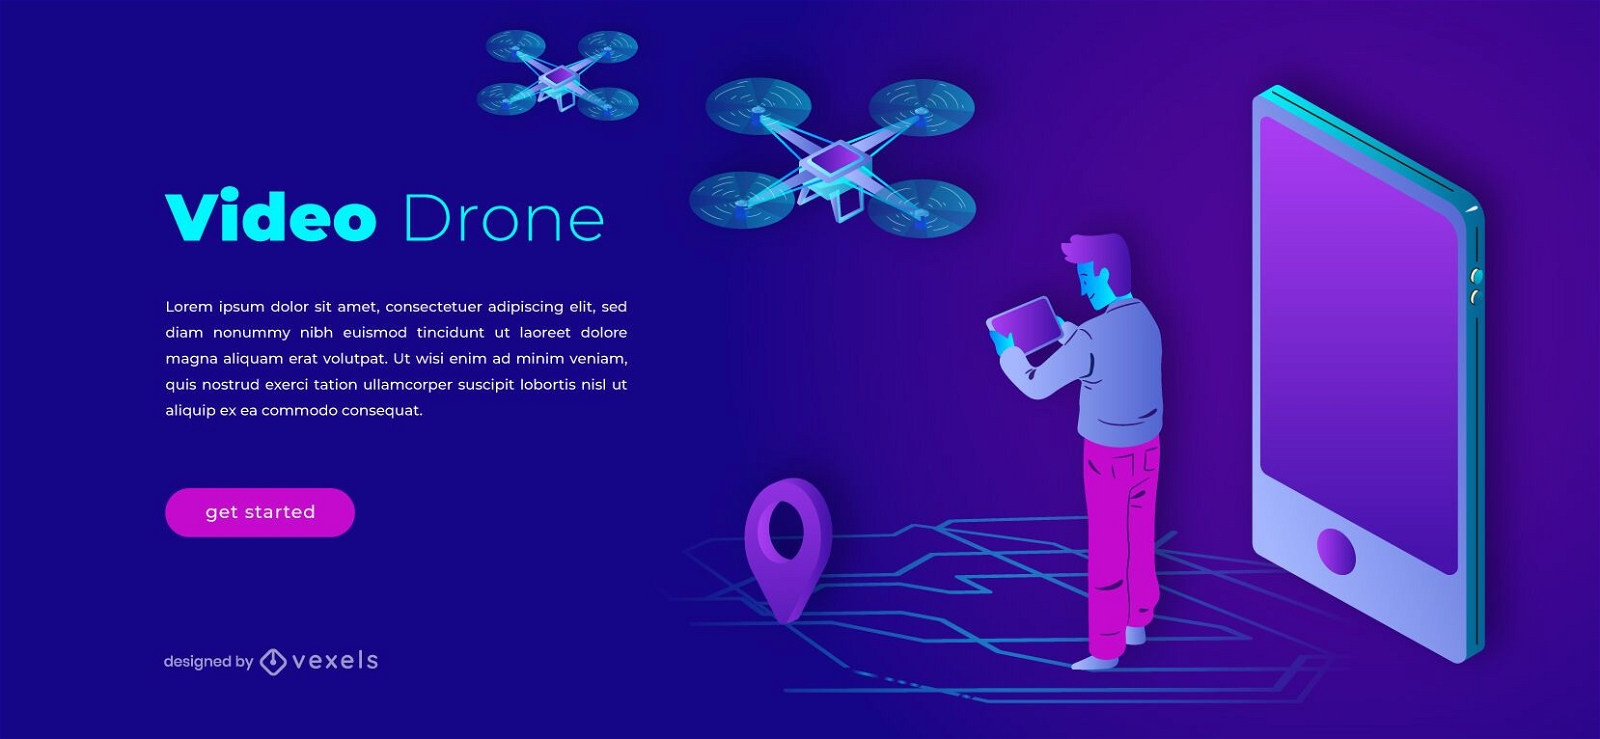 Video drone slider template